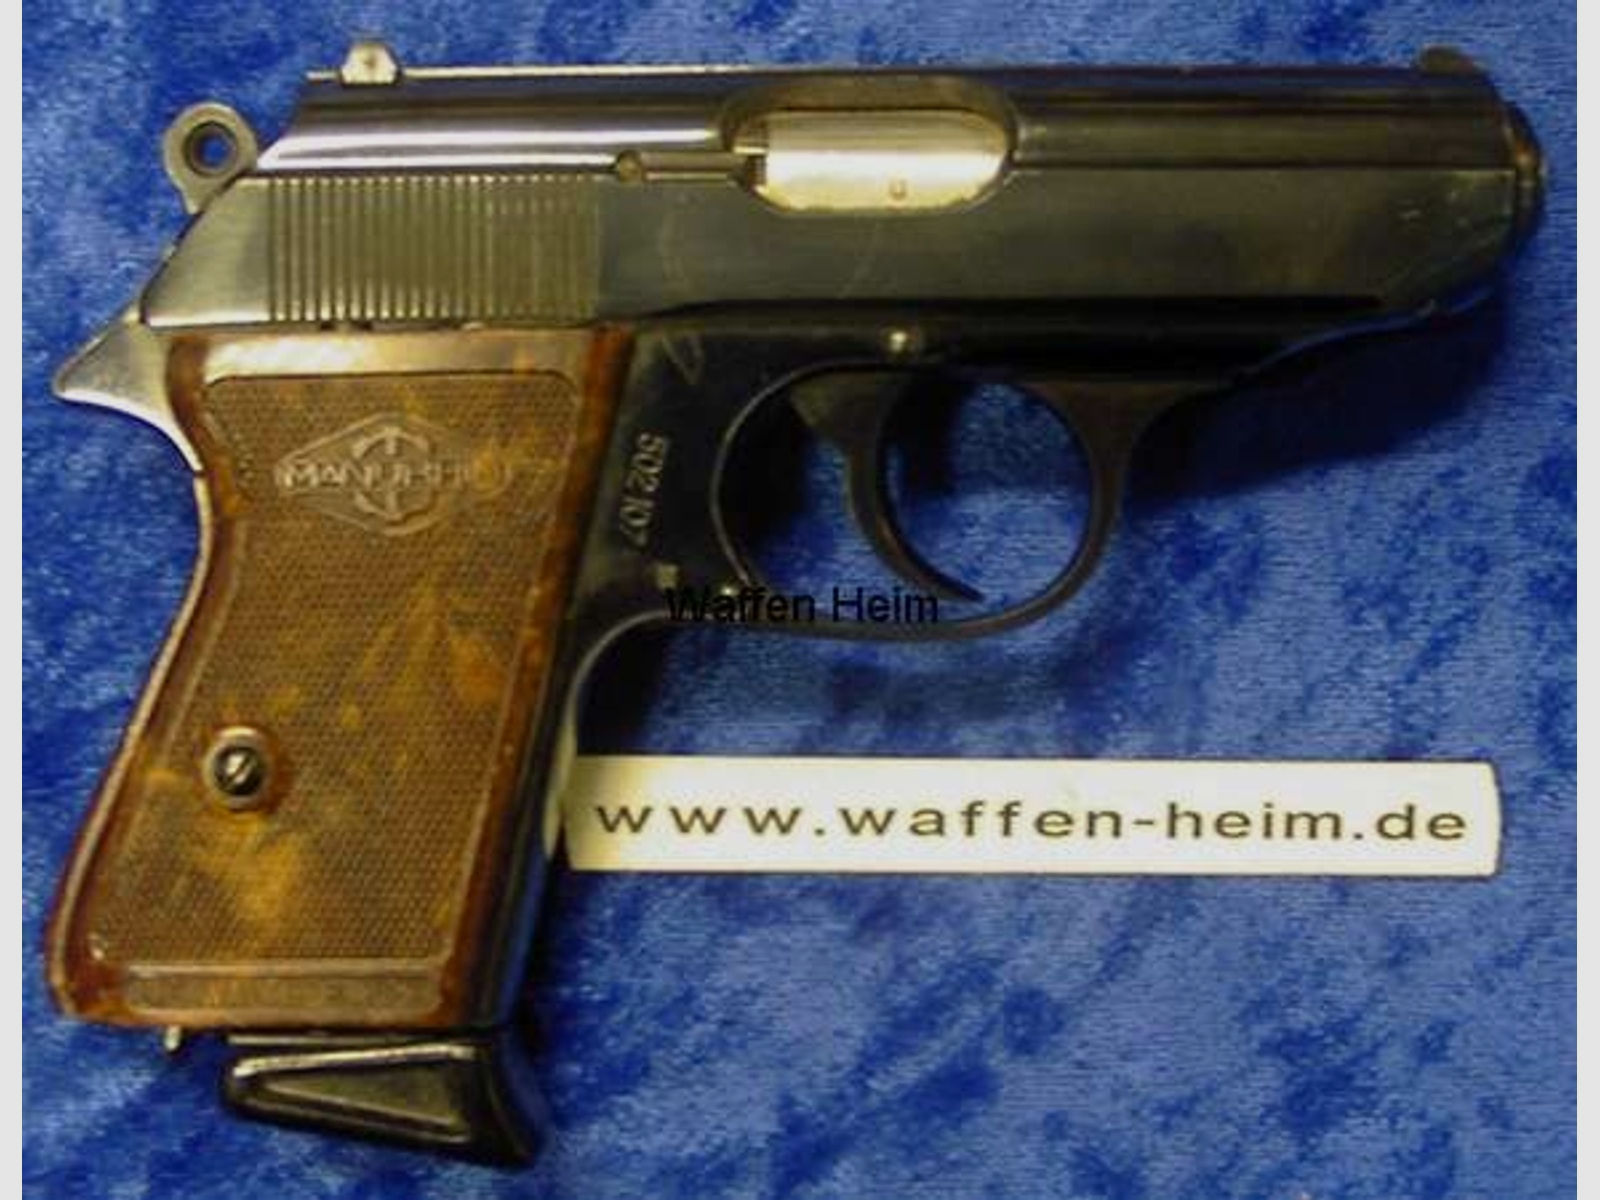 Walther PPK / Manurhin